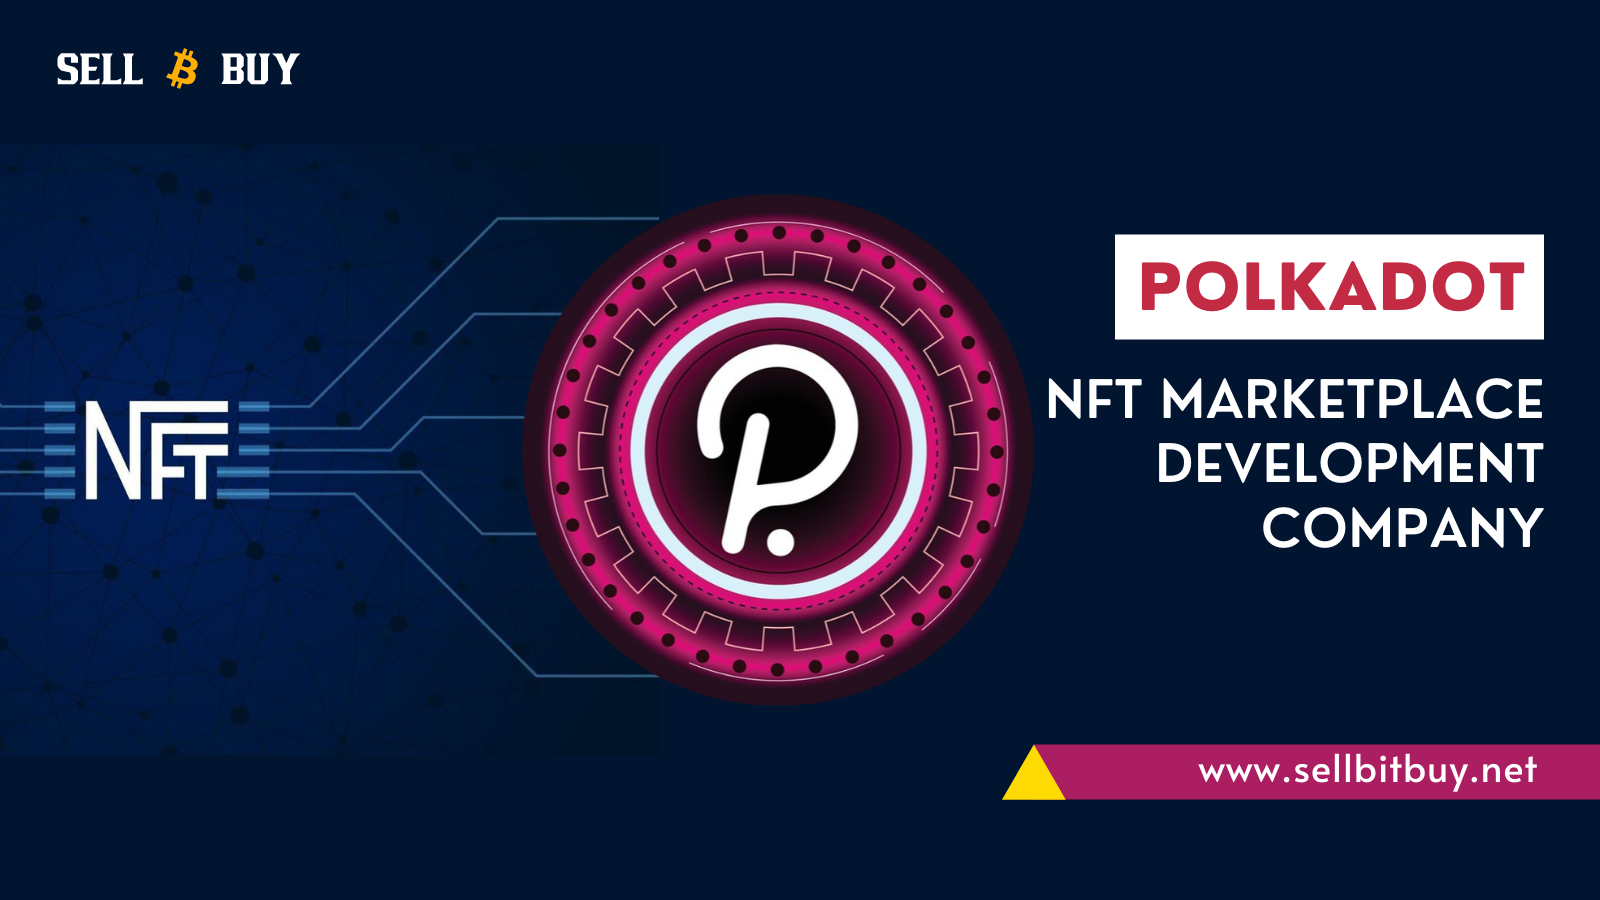 Polkadot NFT Marketplace Development Company